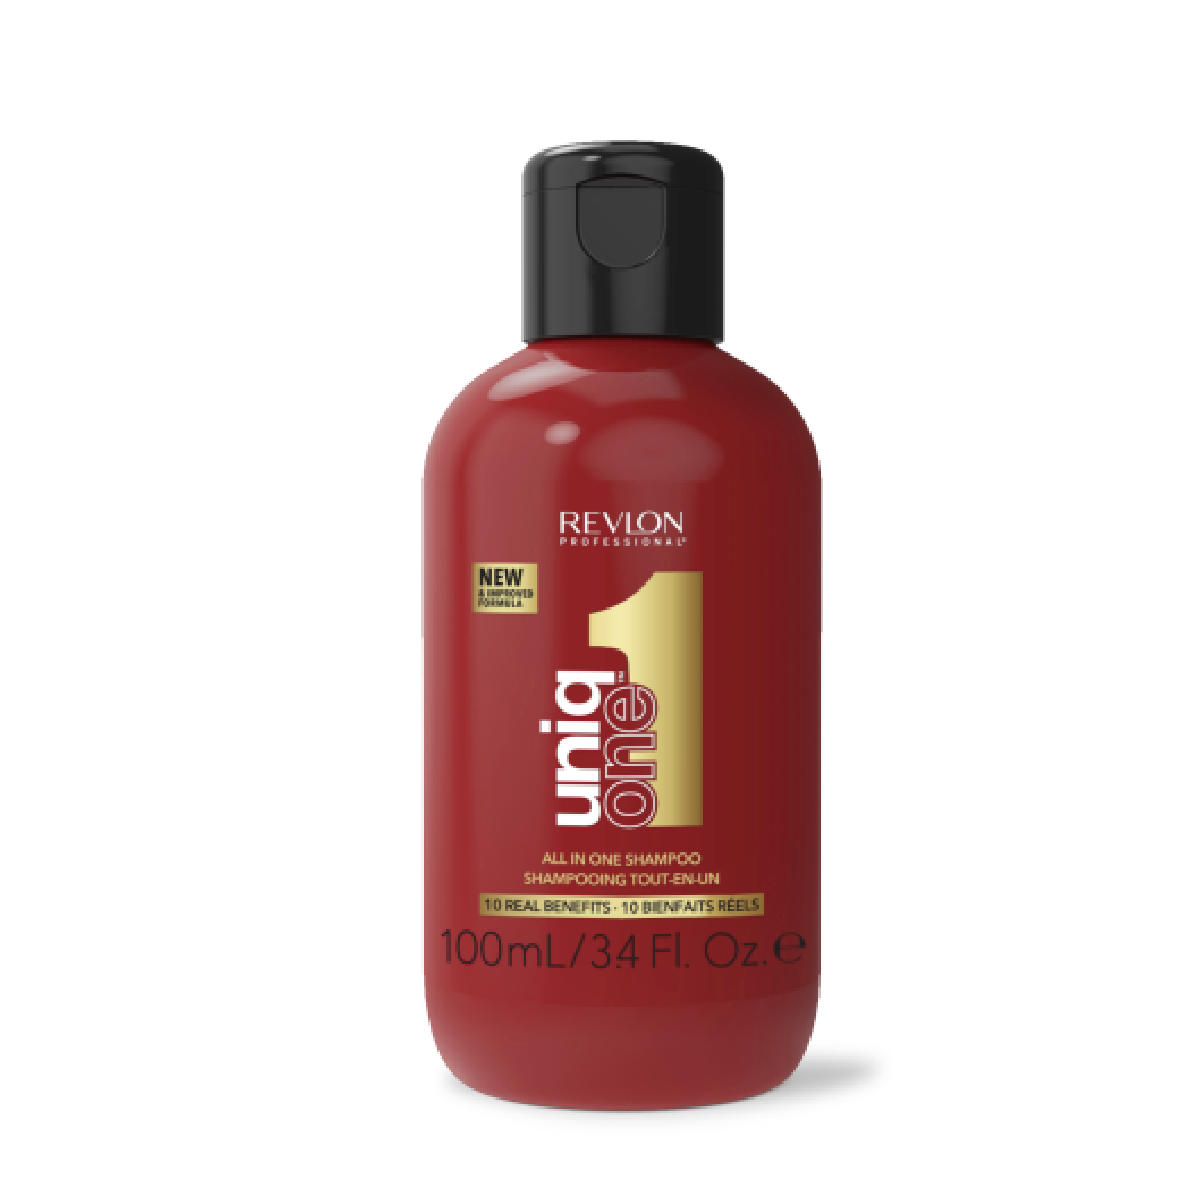 Revlon Professional uniq one All in One Shampoo, 100 ml  - 1